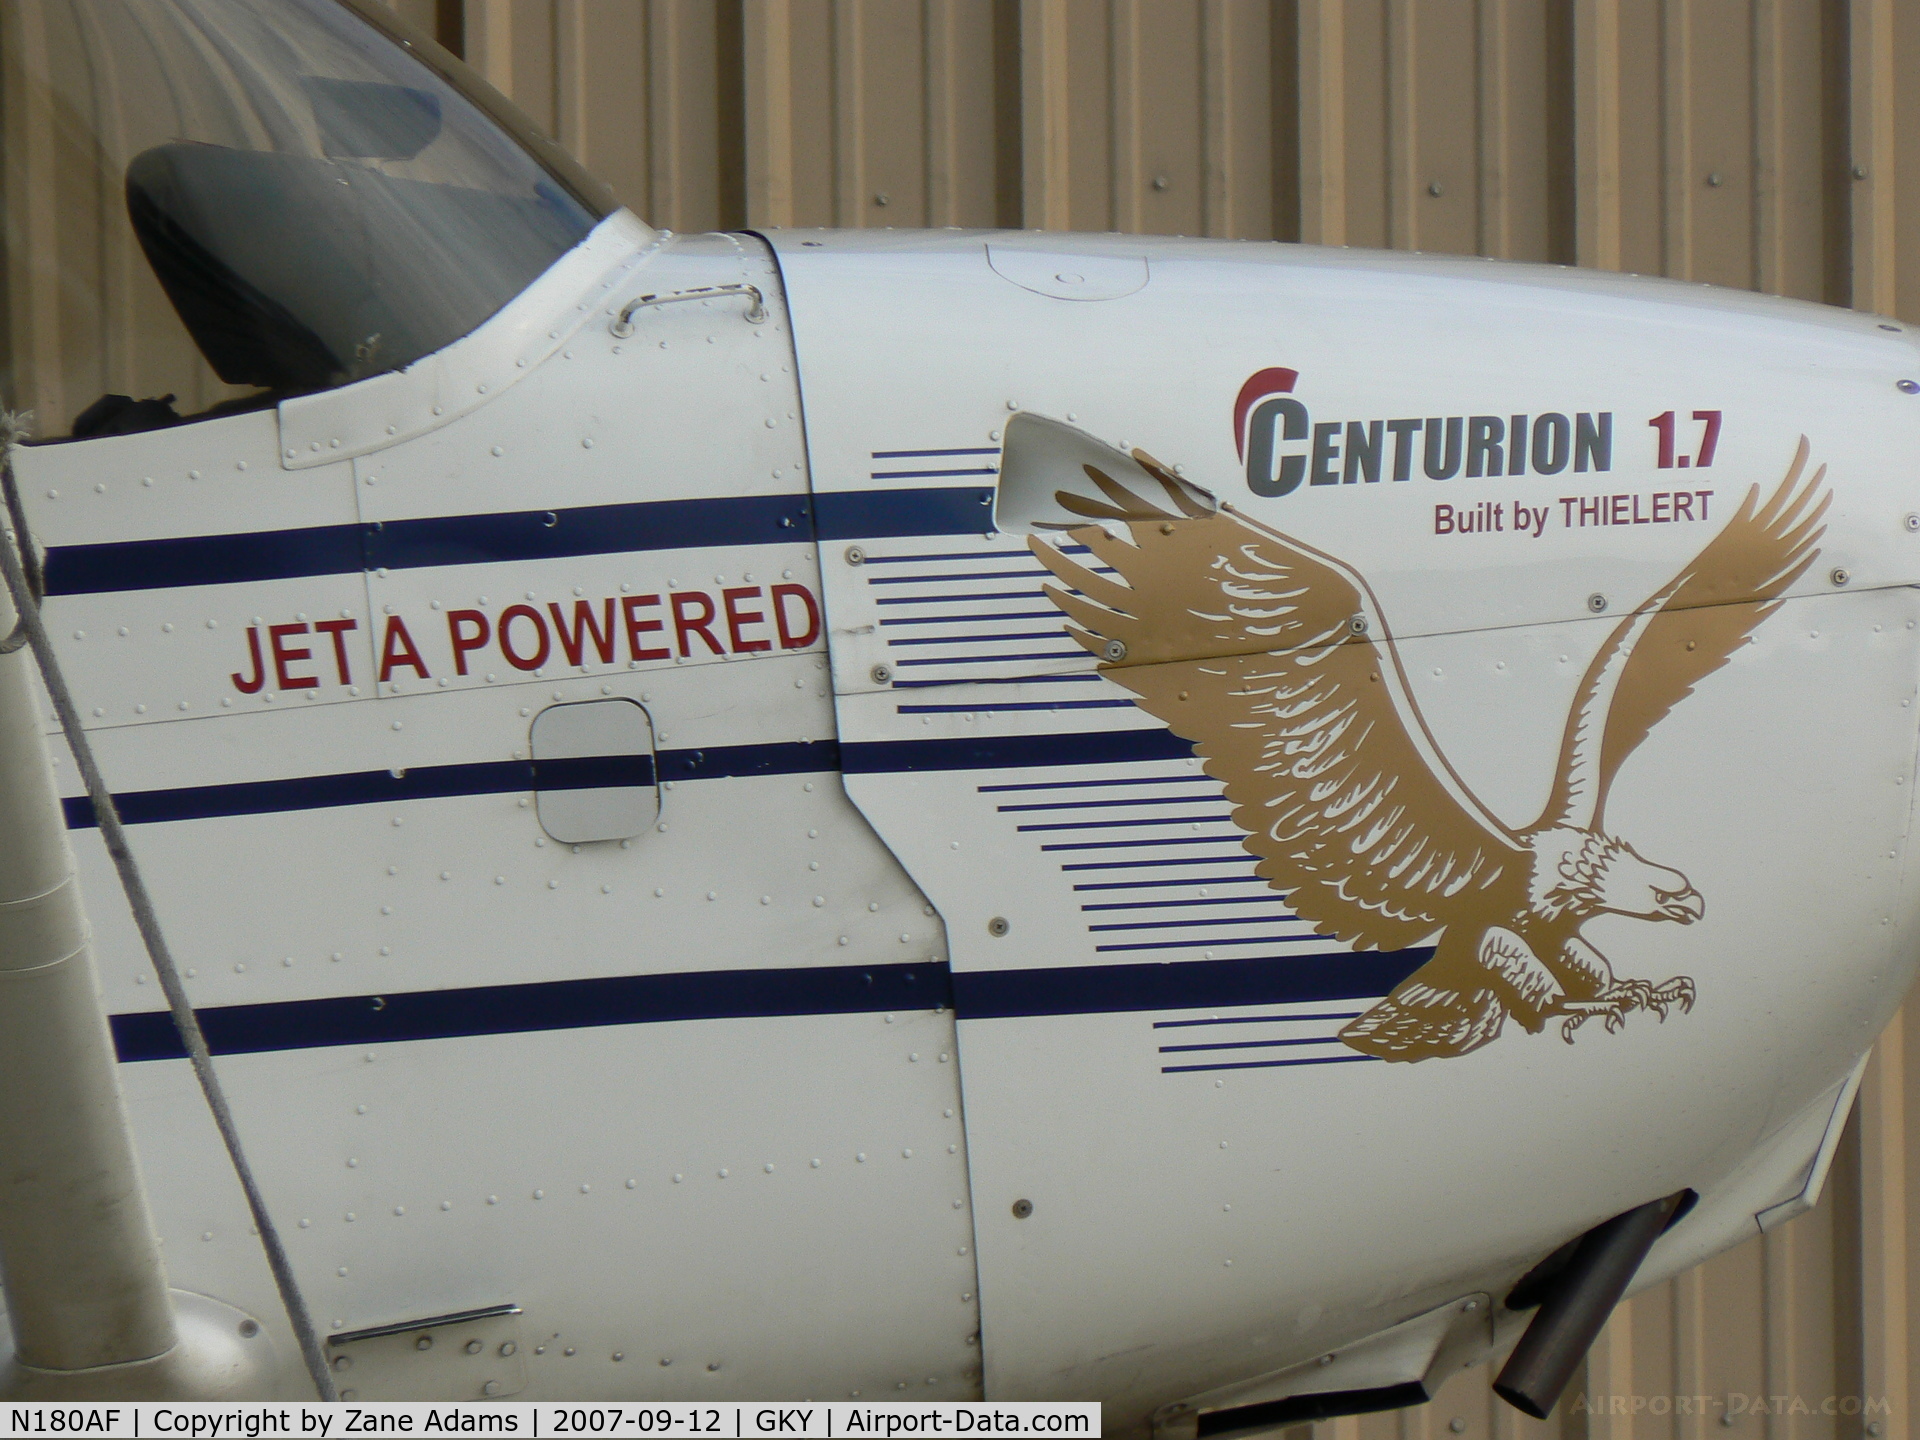 N180AF, 2003 Cessna 172R C/N 17281180, Thielert Centurion kerosene piston engine (Jet A)